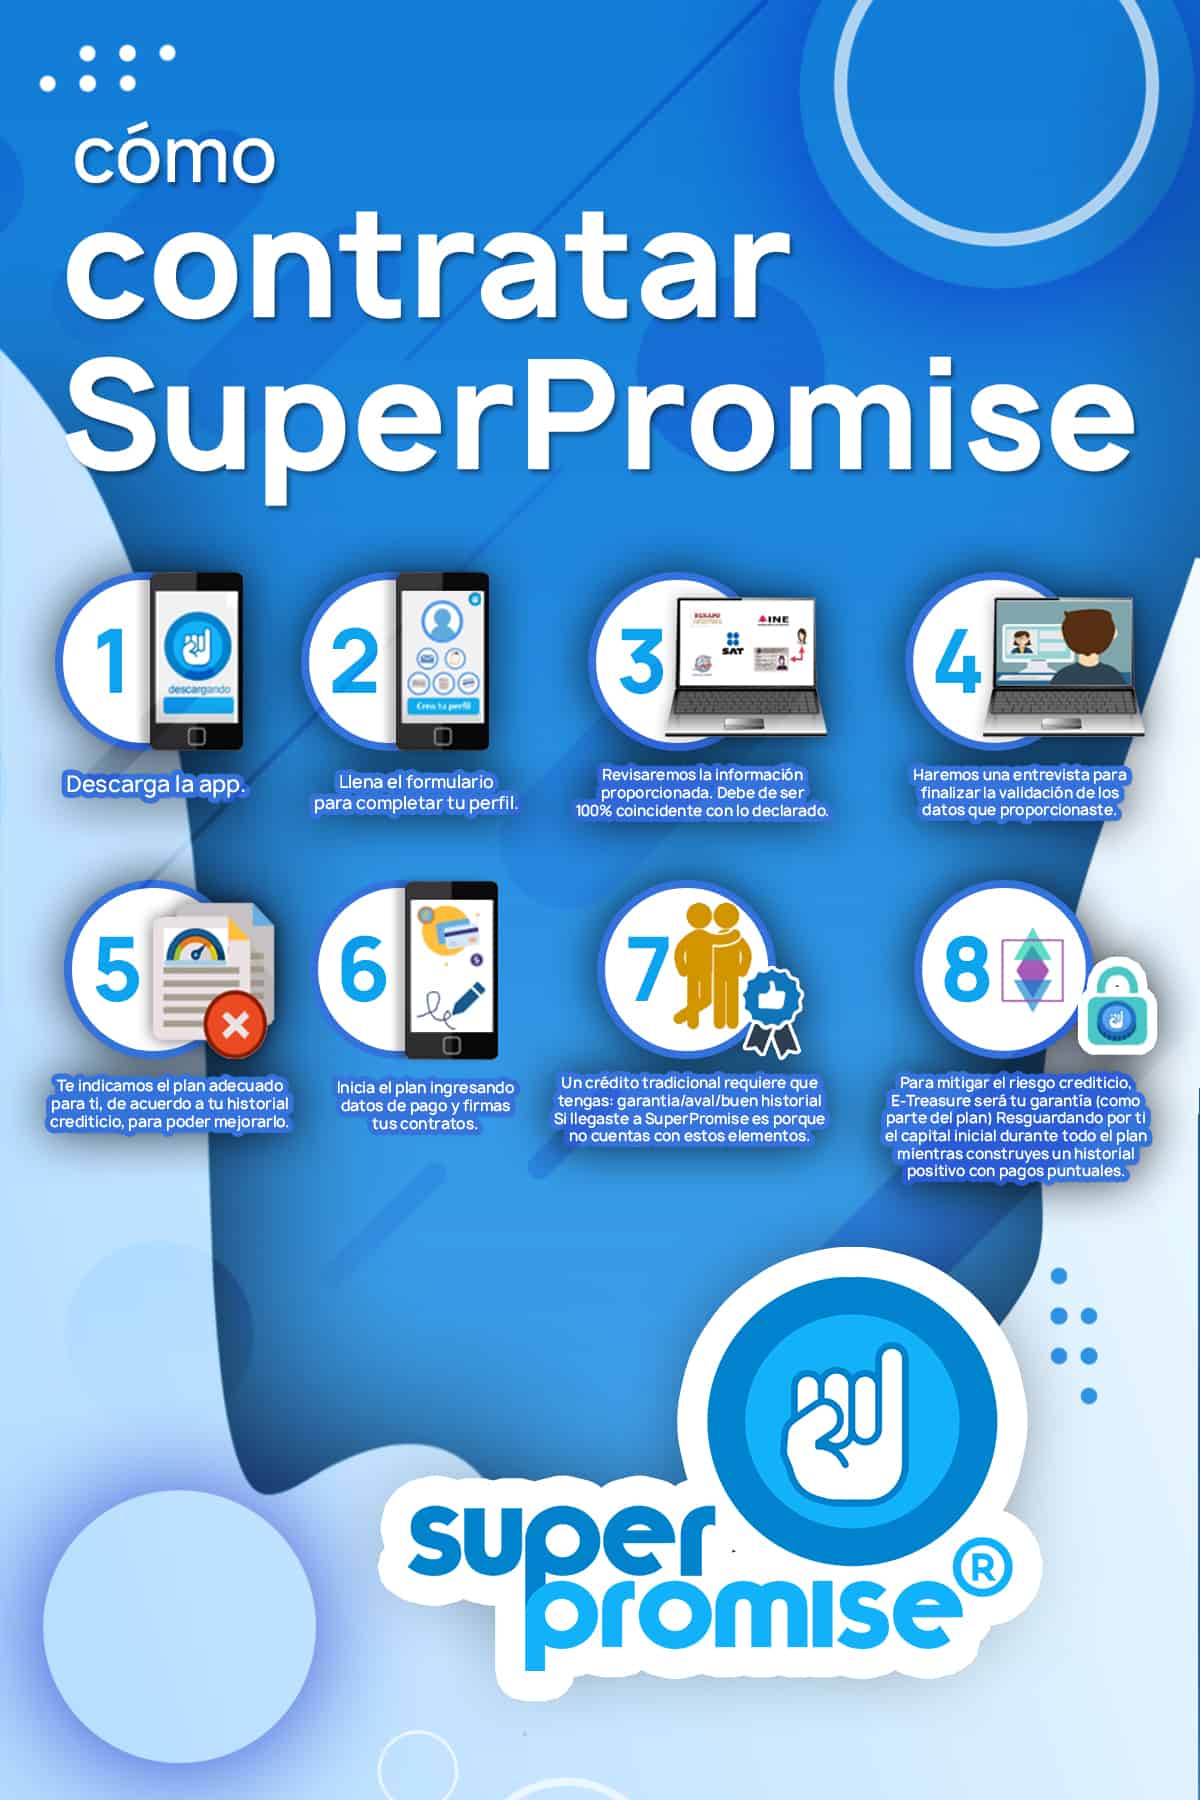 Como funciona Super Promise